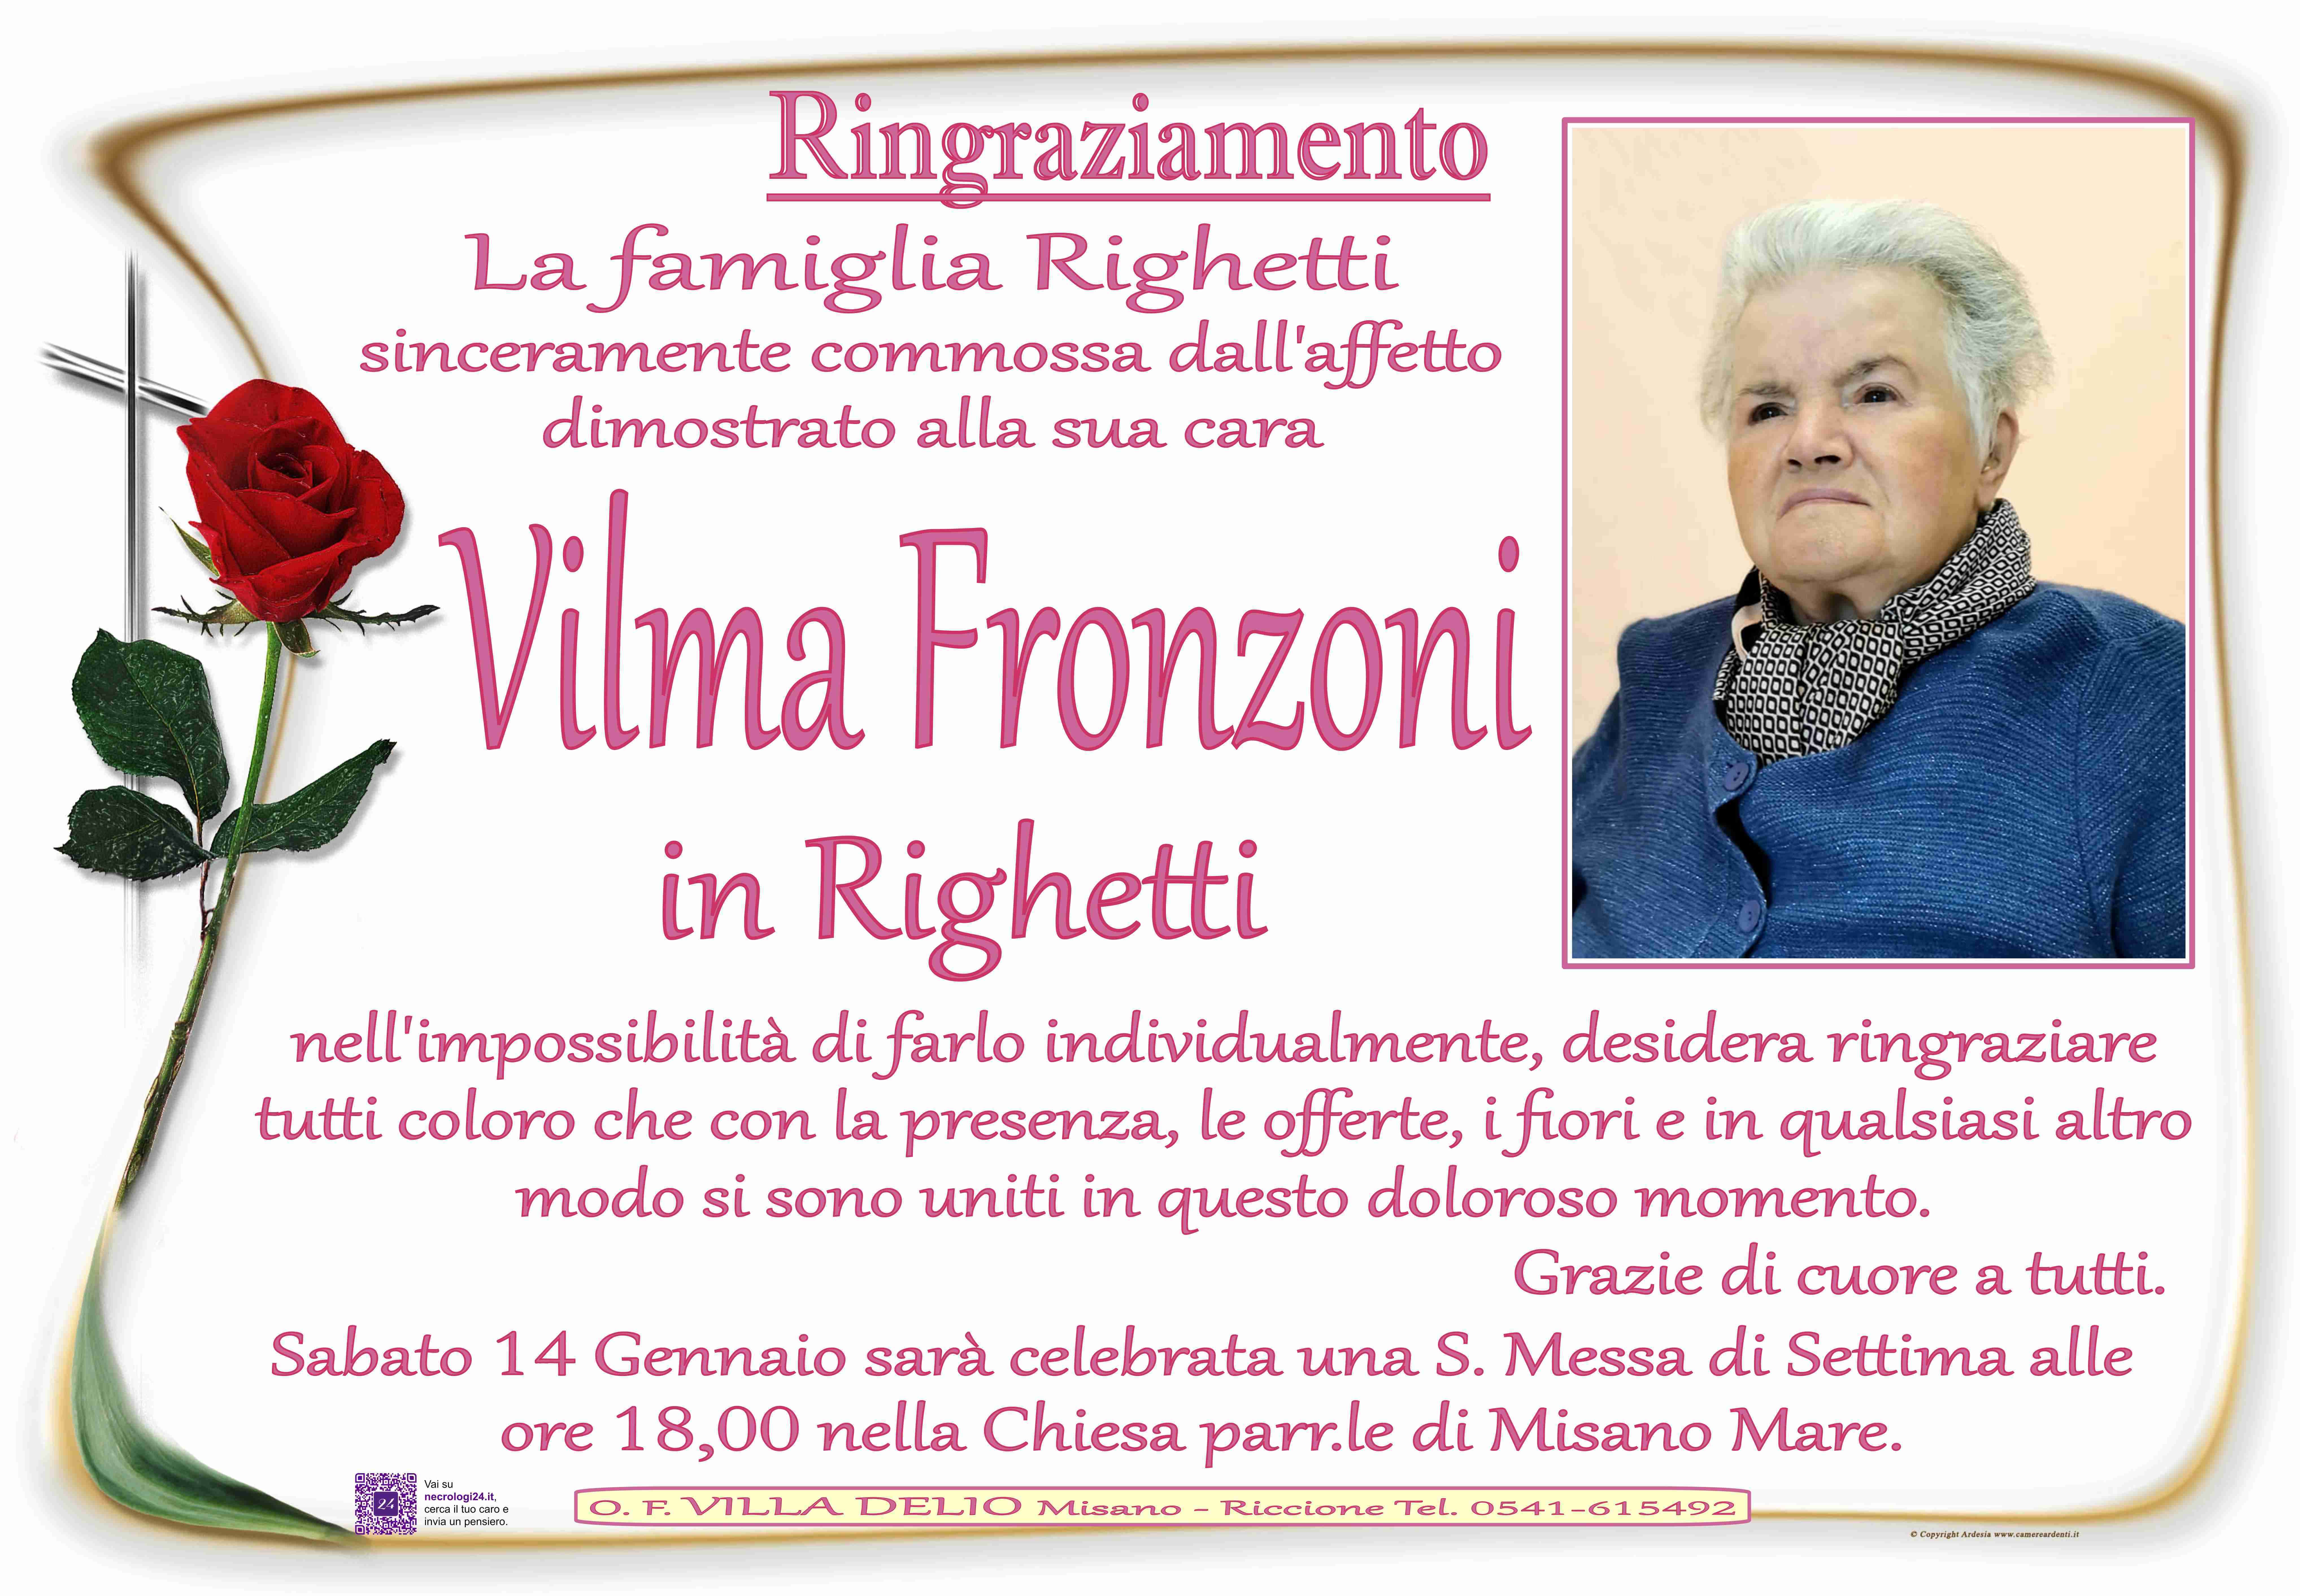 Vilma Fronzoni